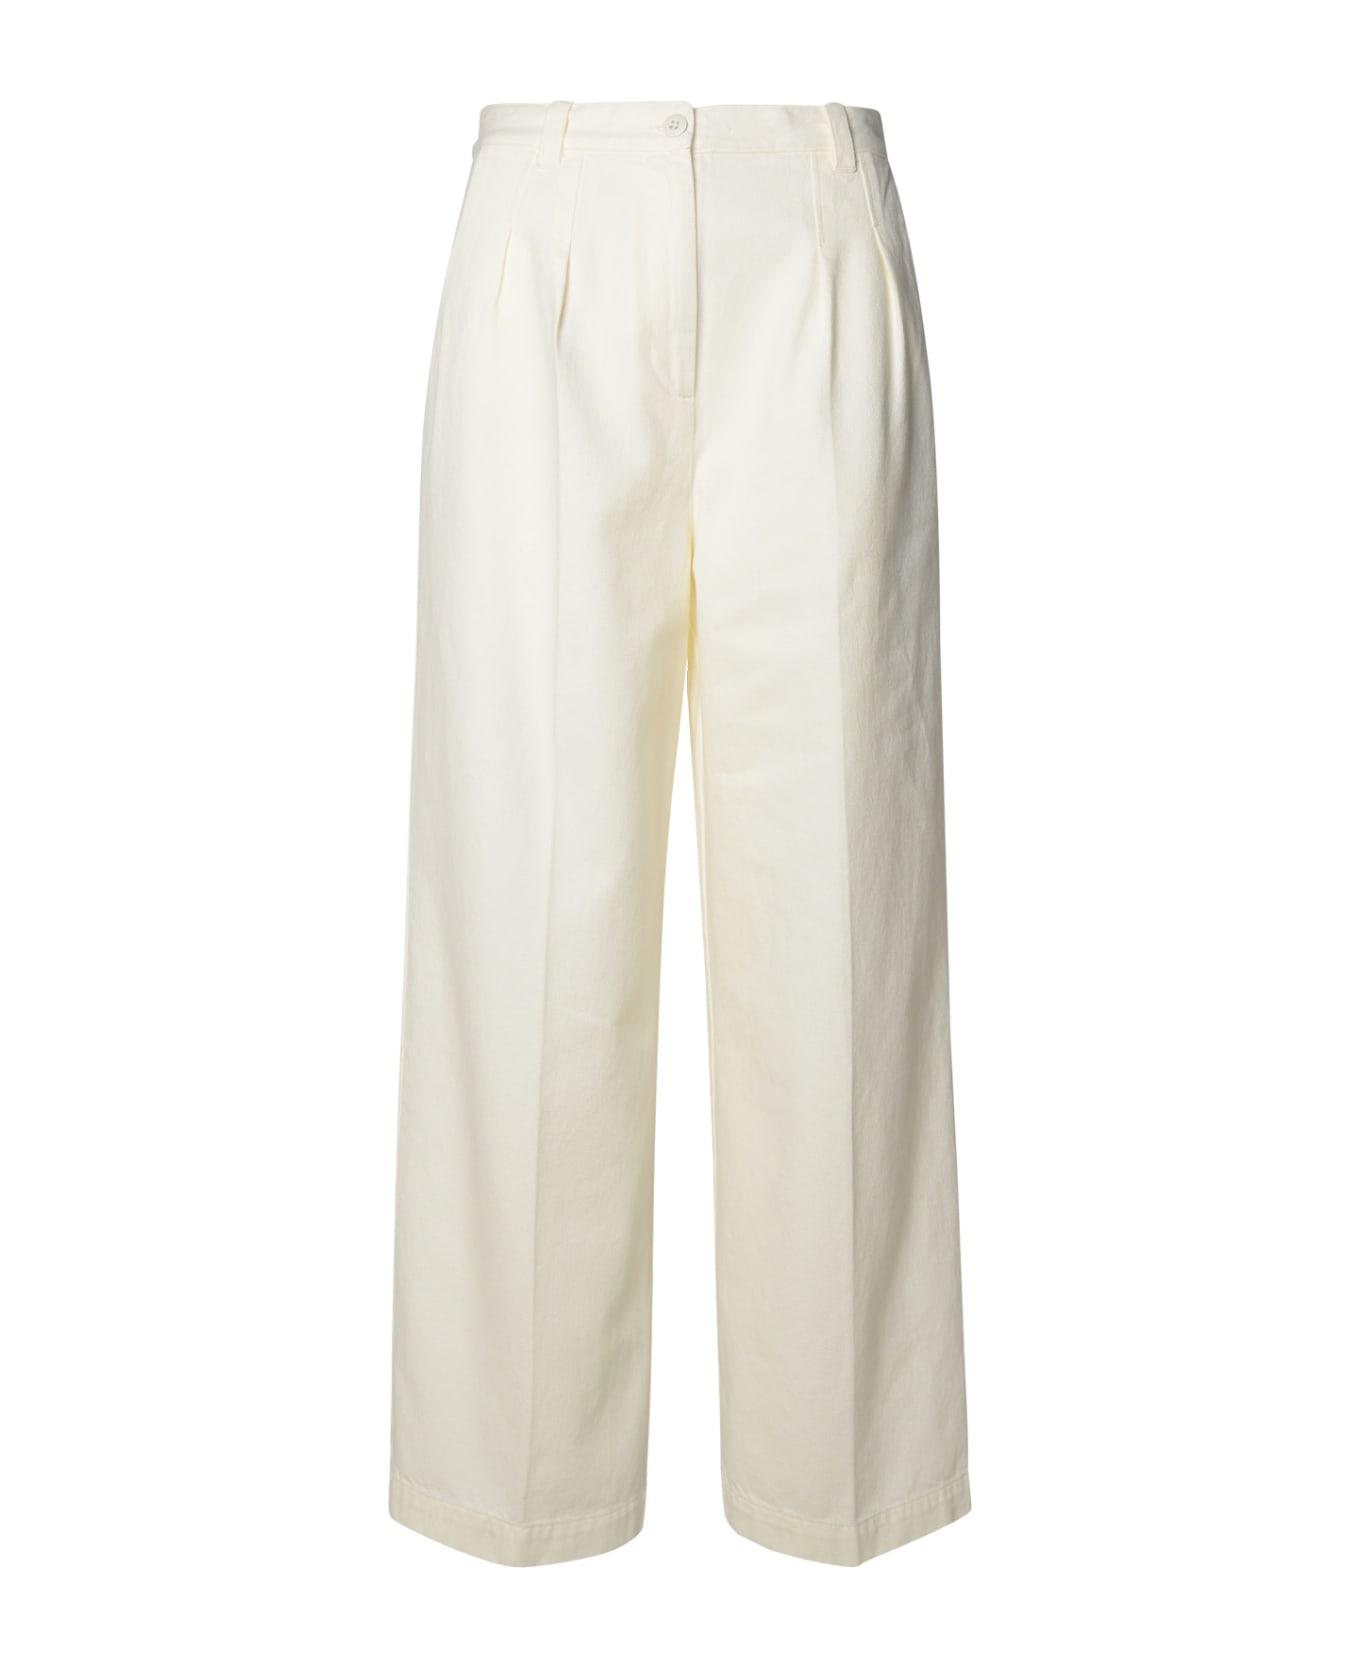 A.P.C. White Cotton Pants - OFF WHITE